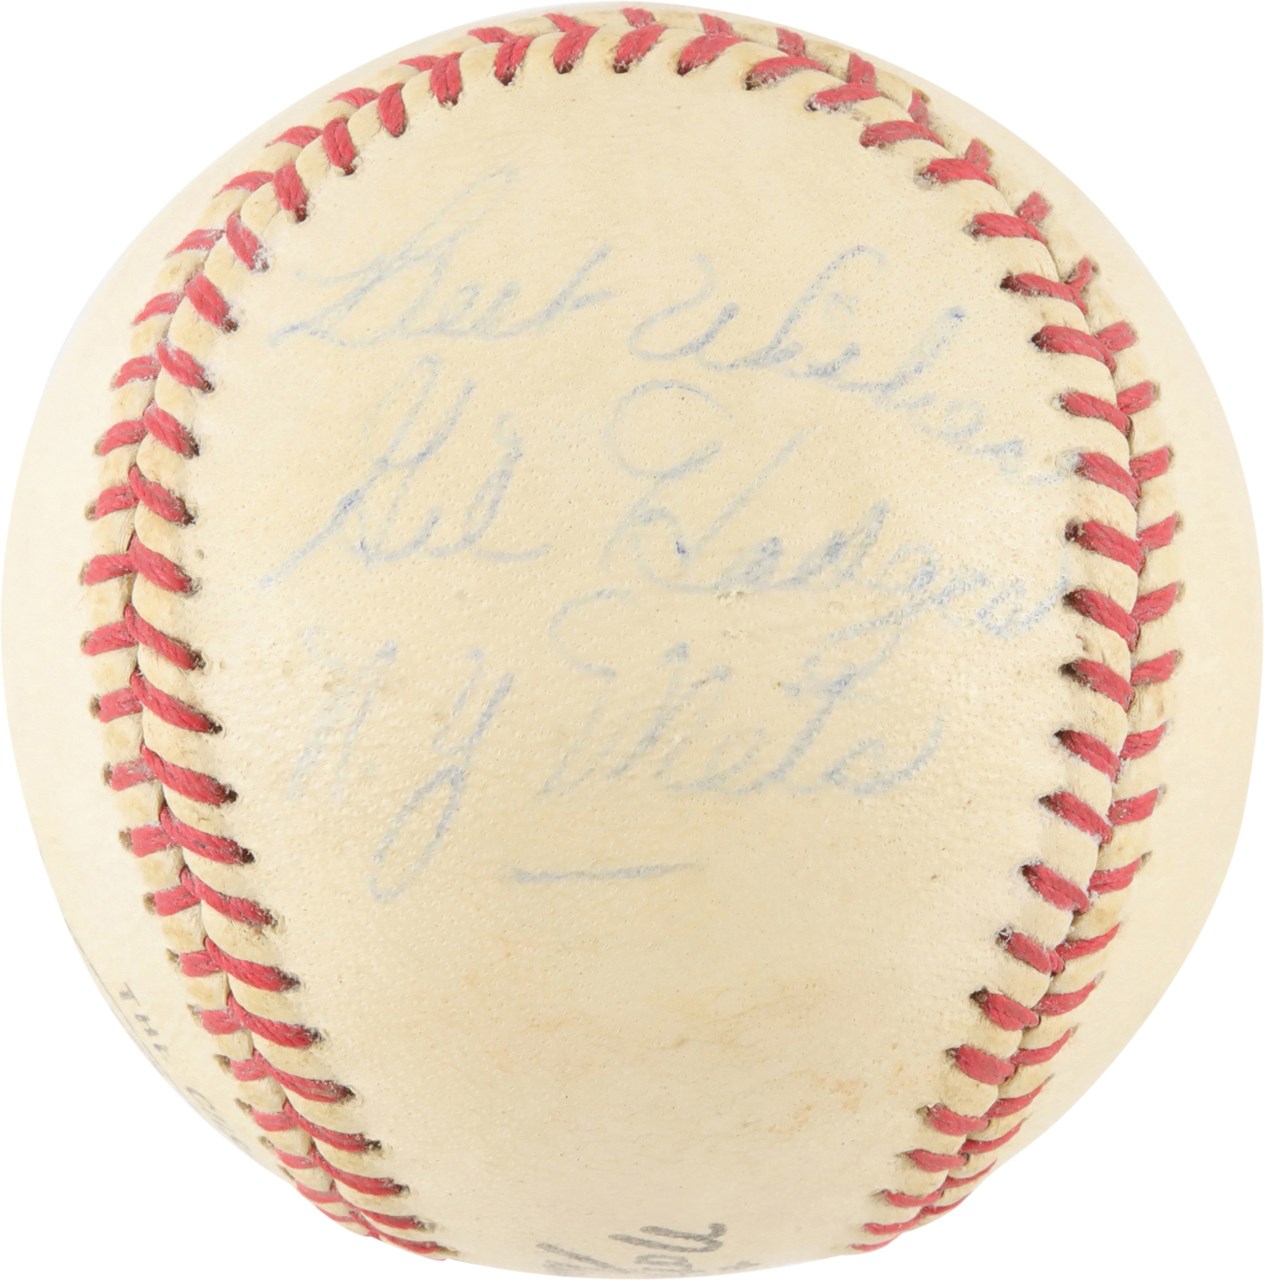 Baseball Autographs - 1960s Gil Hodges "NY Mets" Single Signed Baseball (JSA)